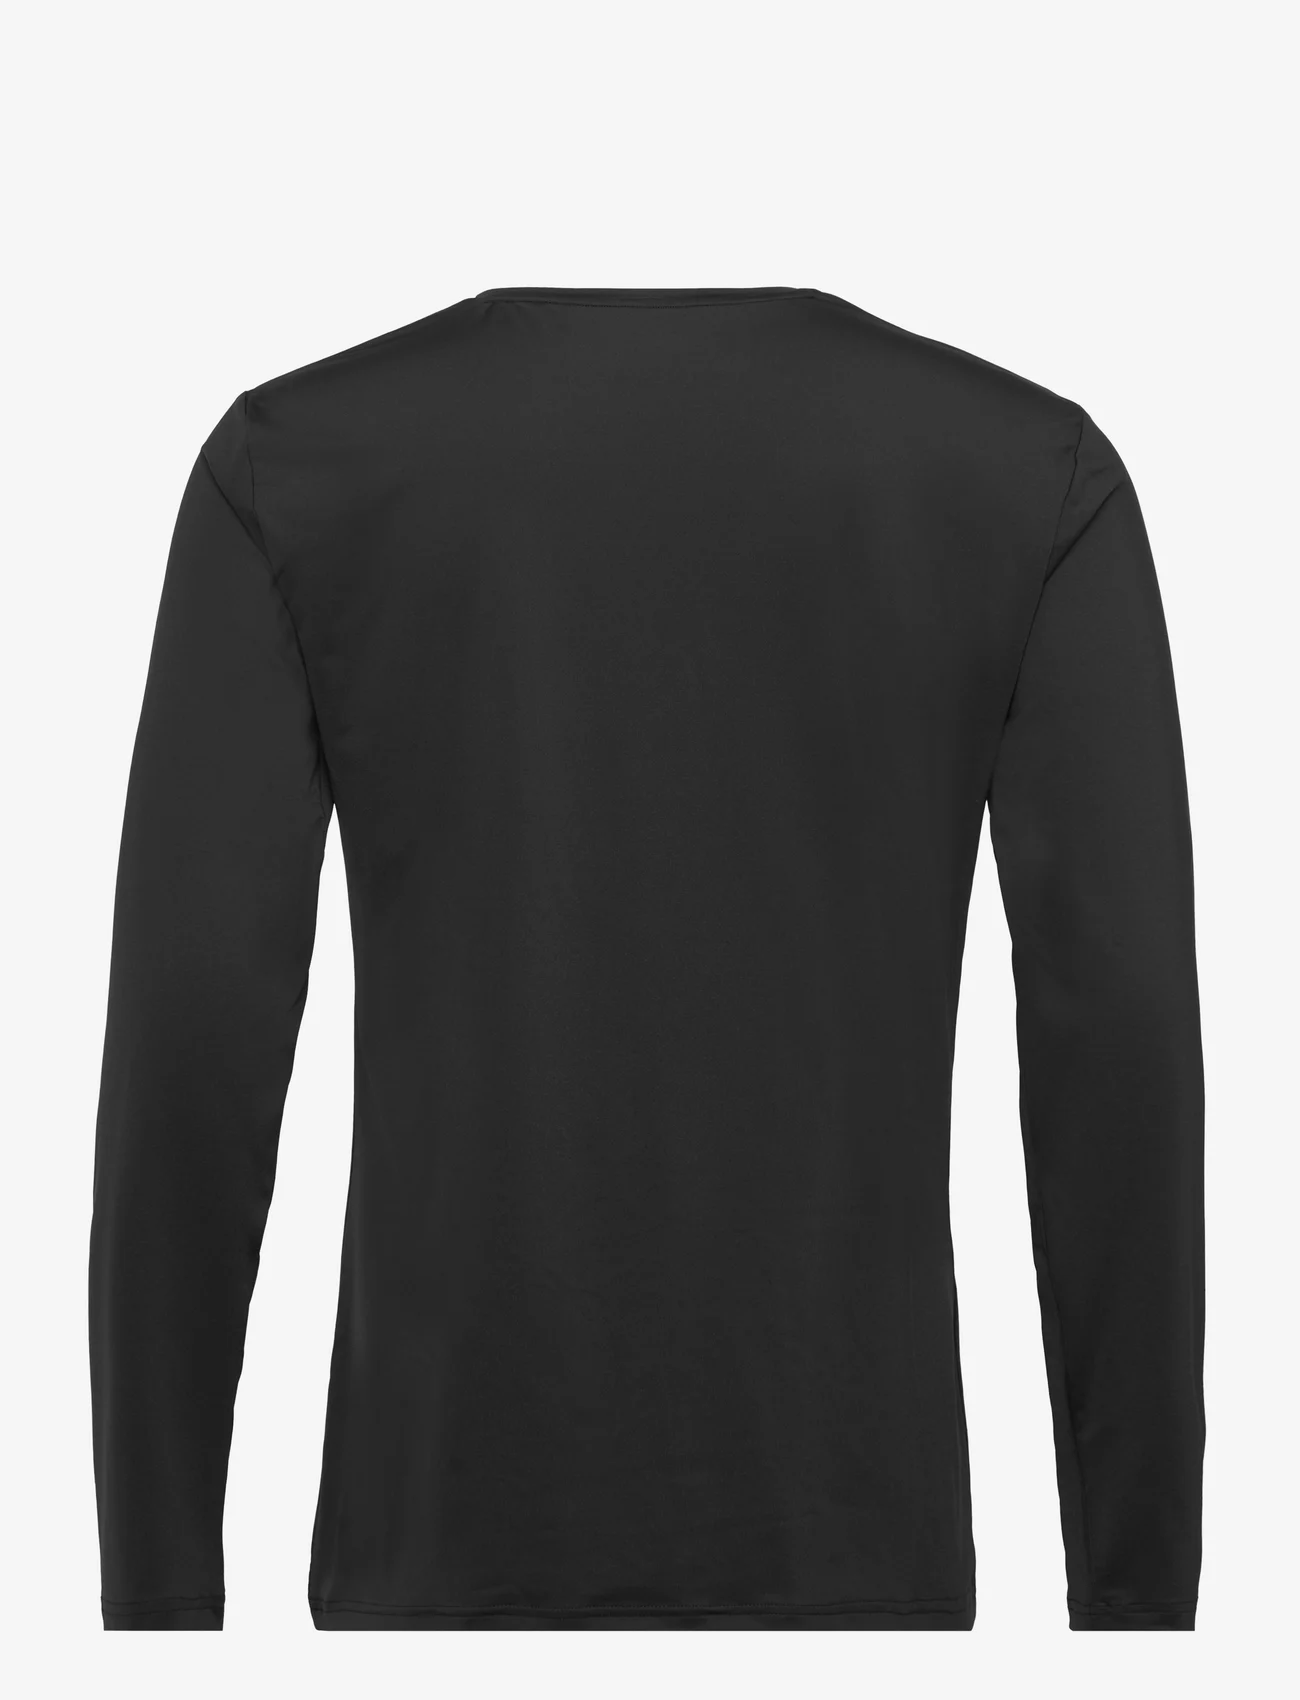 Bread & Boxers - Long Sleeve Active - basic t-shirts - black - 1